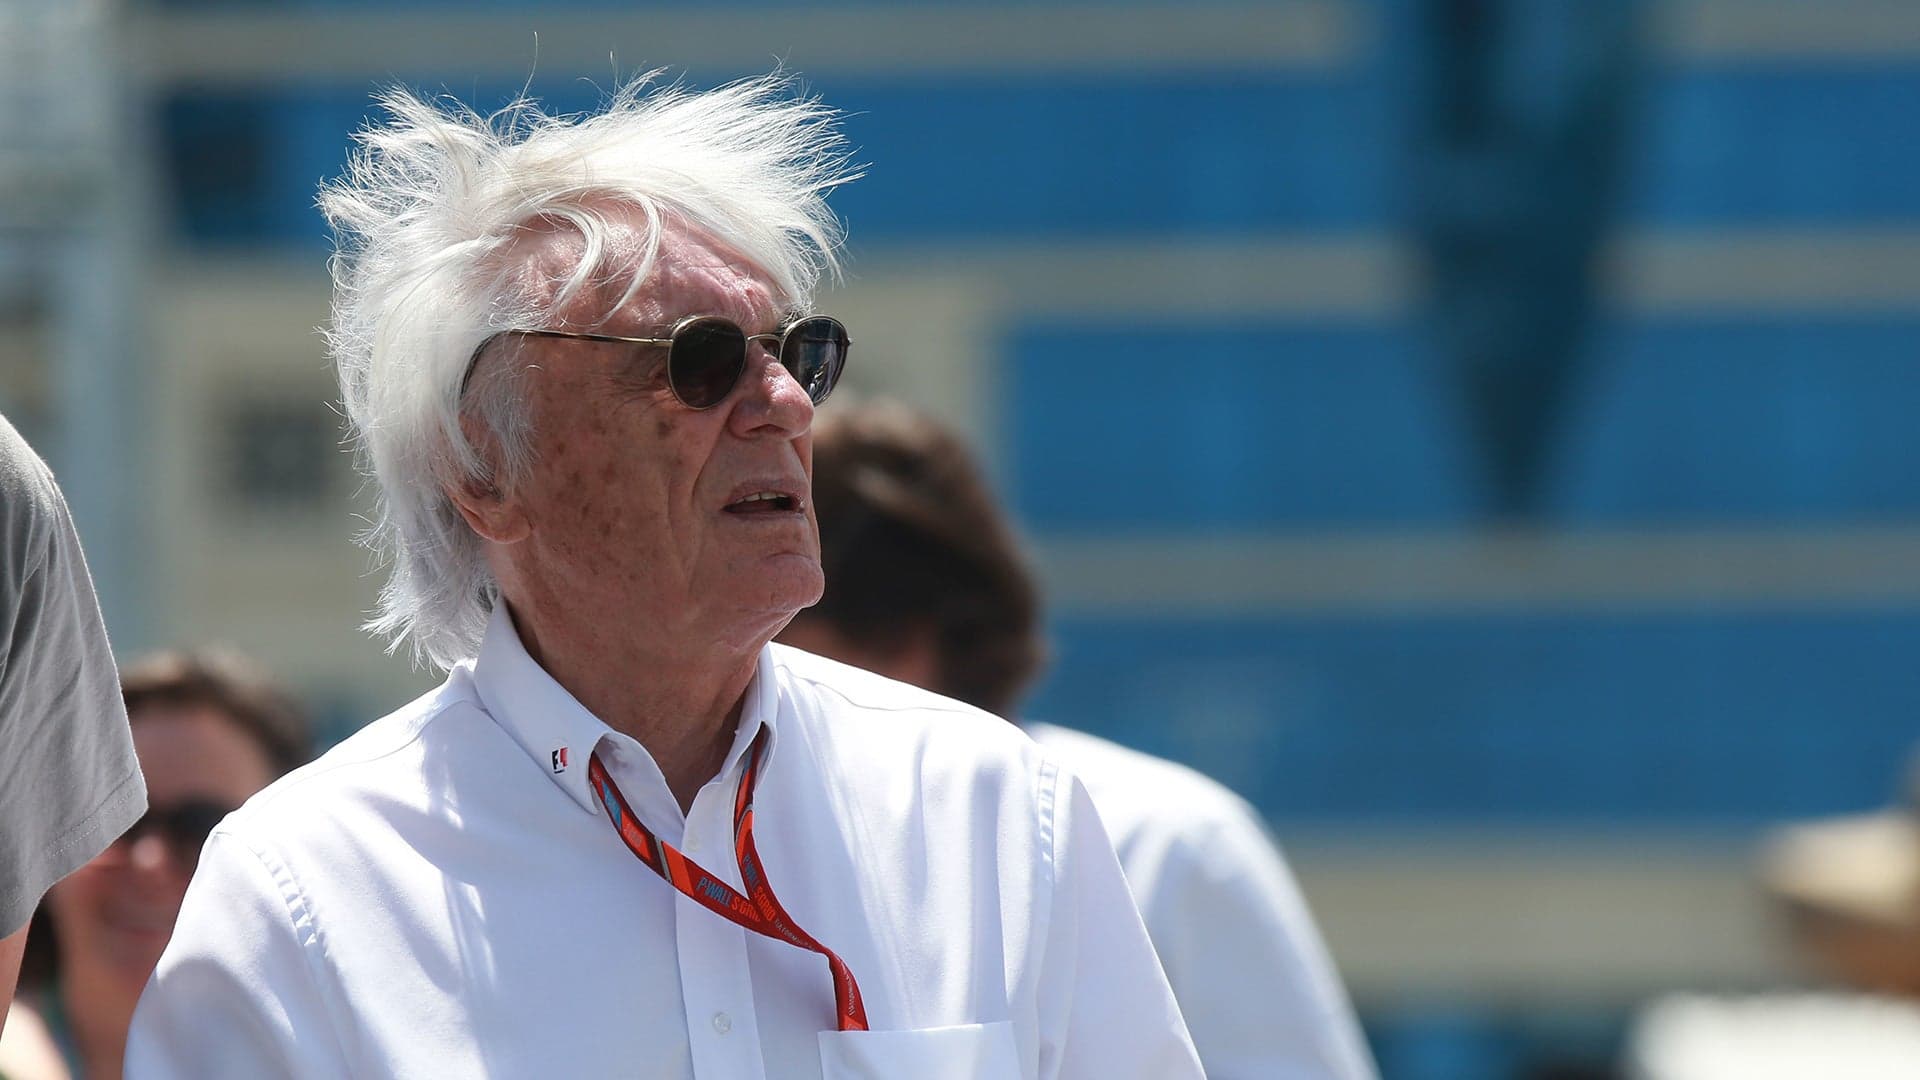 Ferrari Isn’t Joking About Potentially Leaving Formula 1, Bernie Ecclestone Says